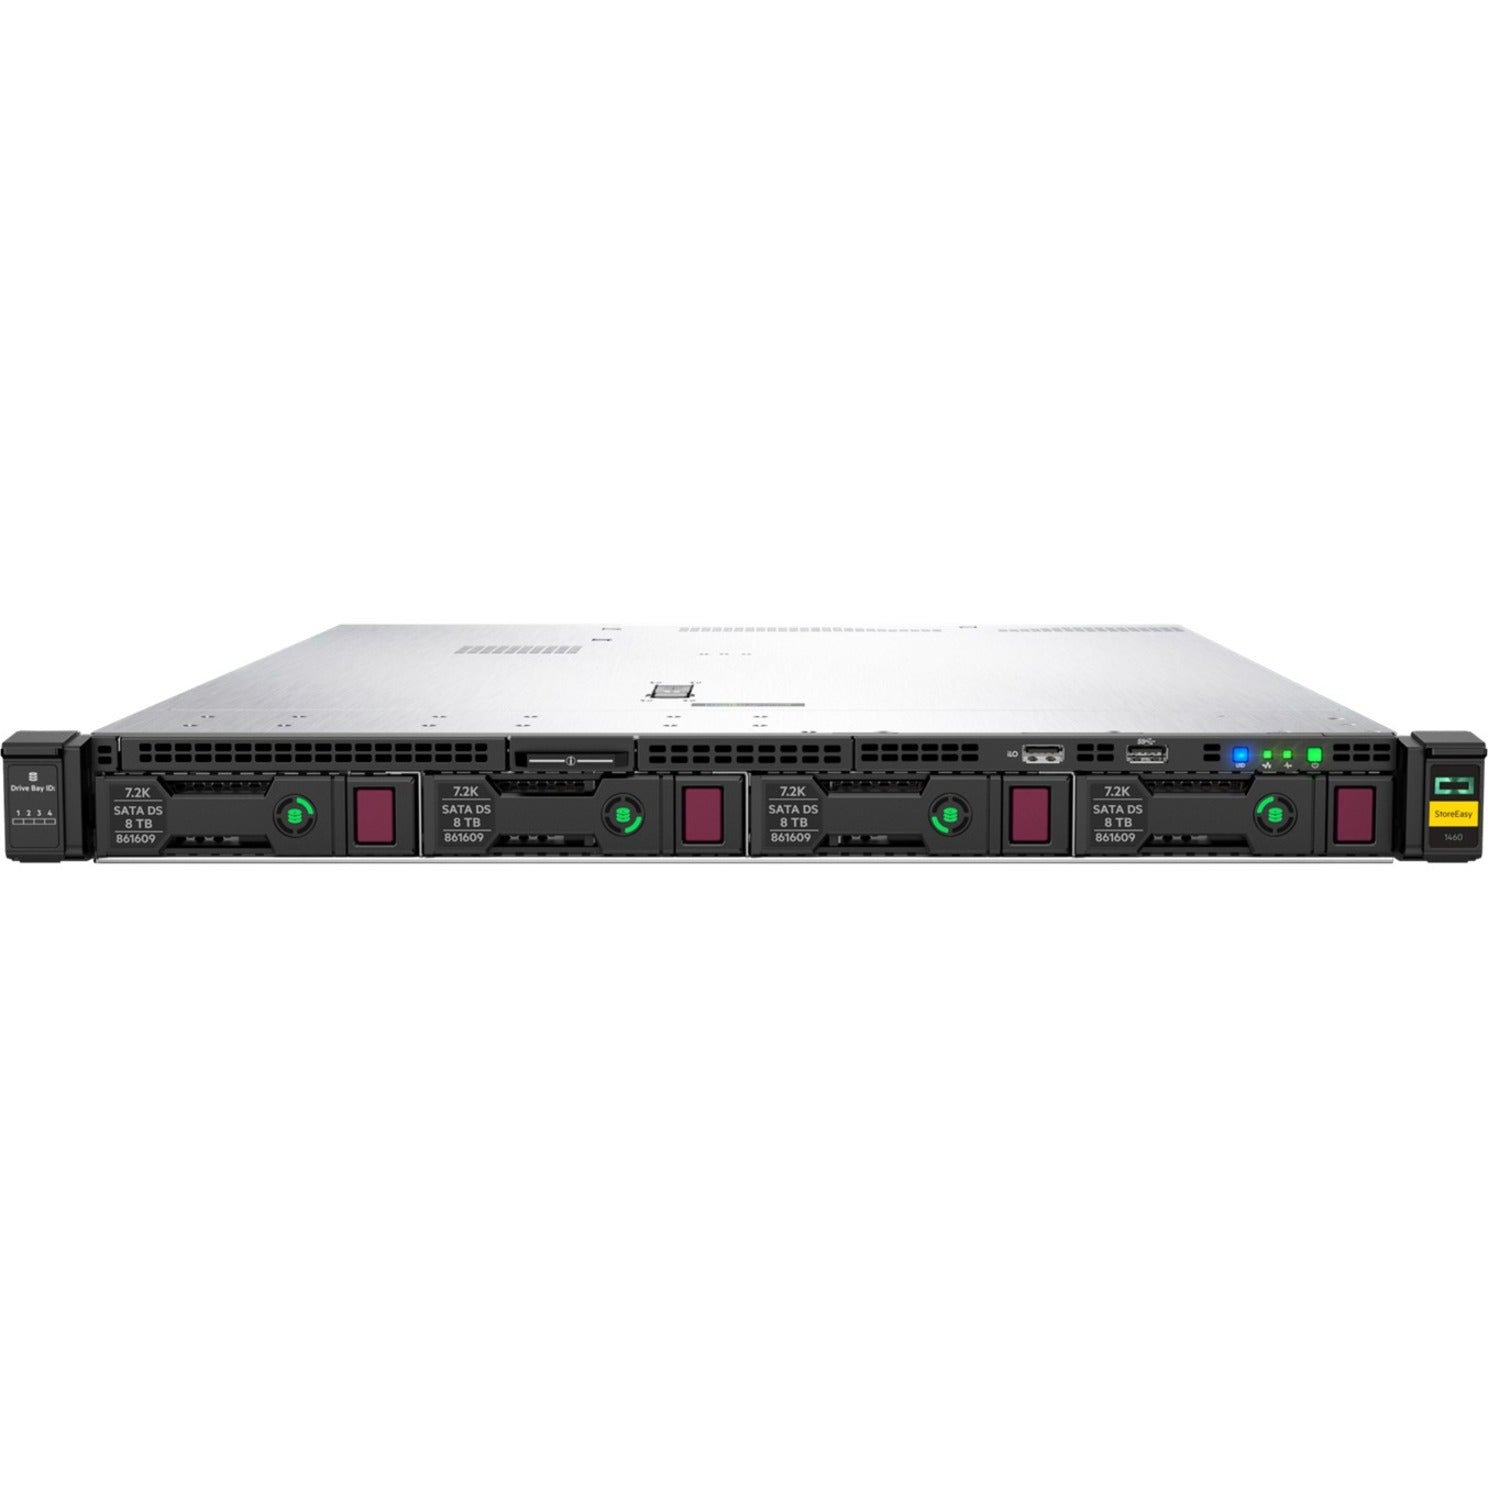 HPE R7G16A StoreEasy 1460 8TB SATA Storage with Microsoft Windows Server IoT 2019, 16GB Memory, 7200 RPM, 6 Gbit/s Transfer Rate